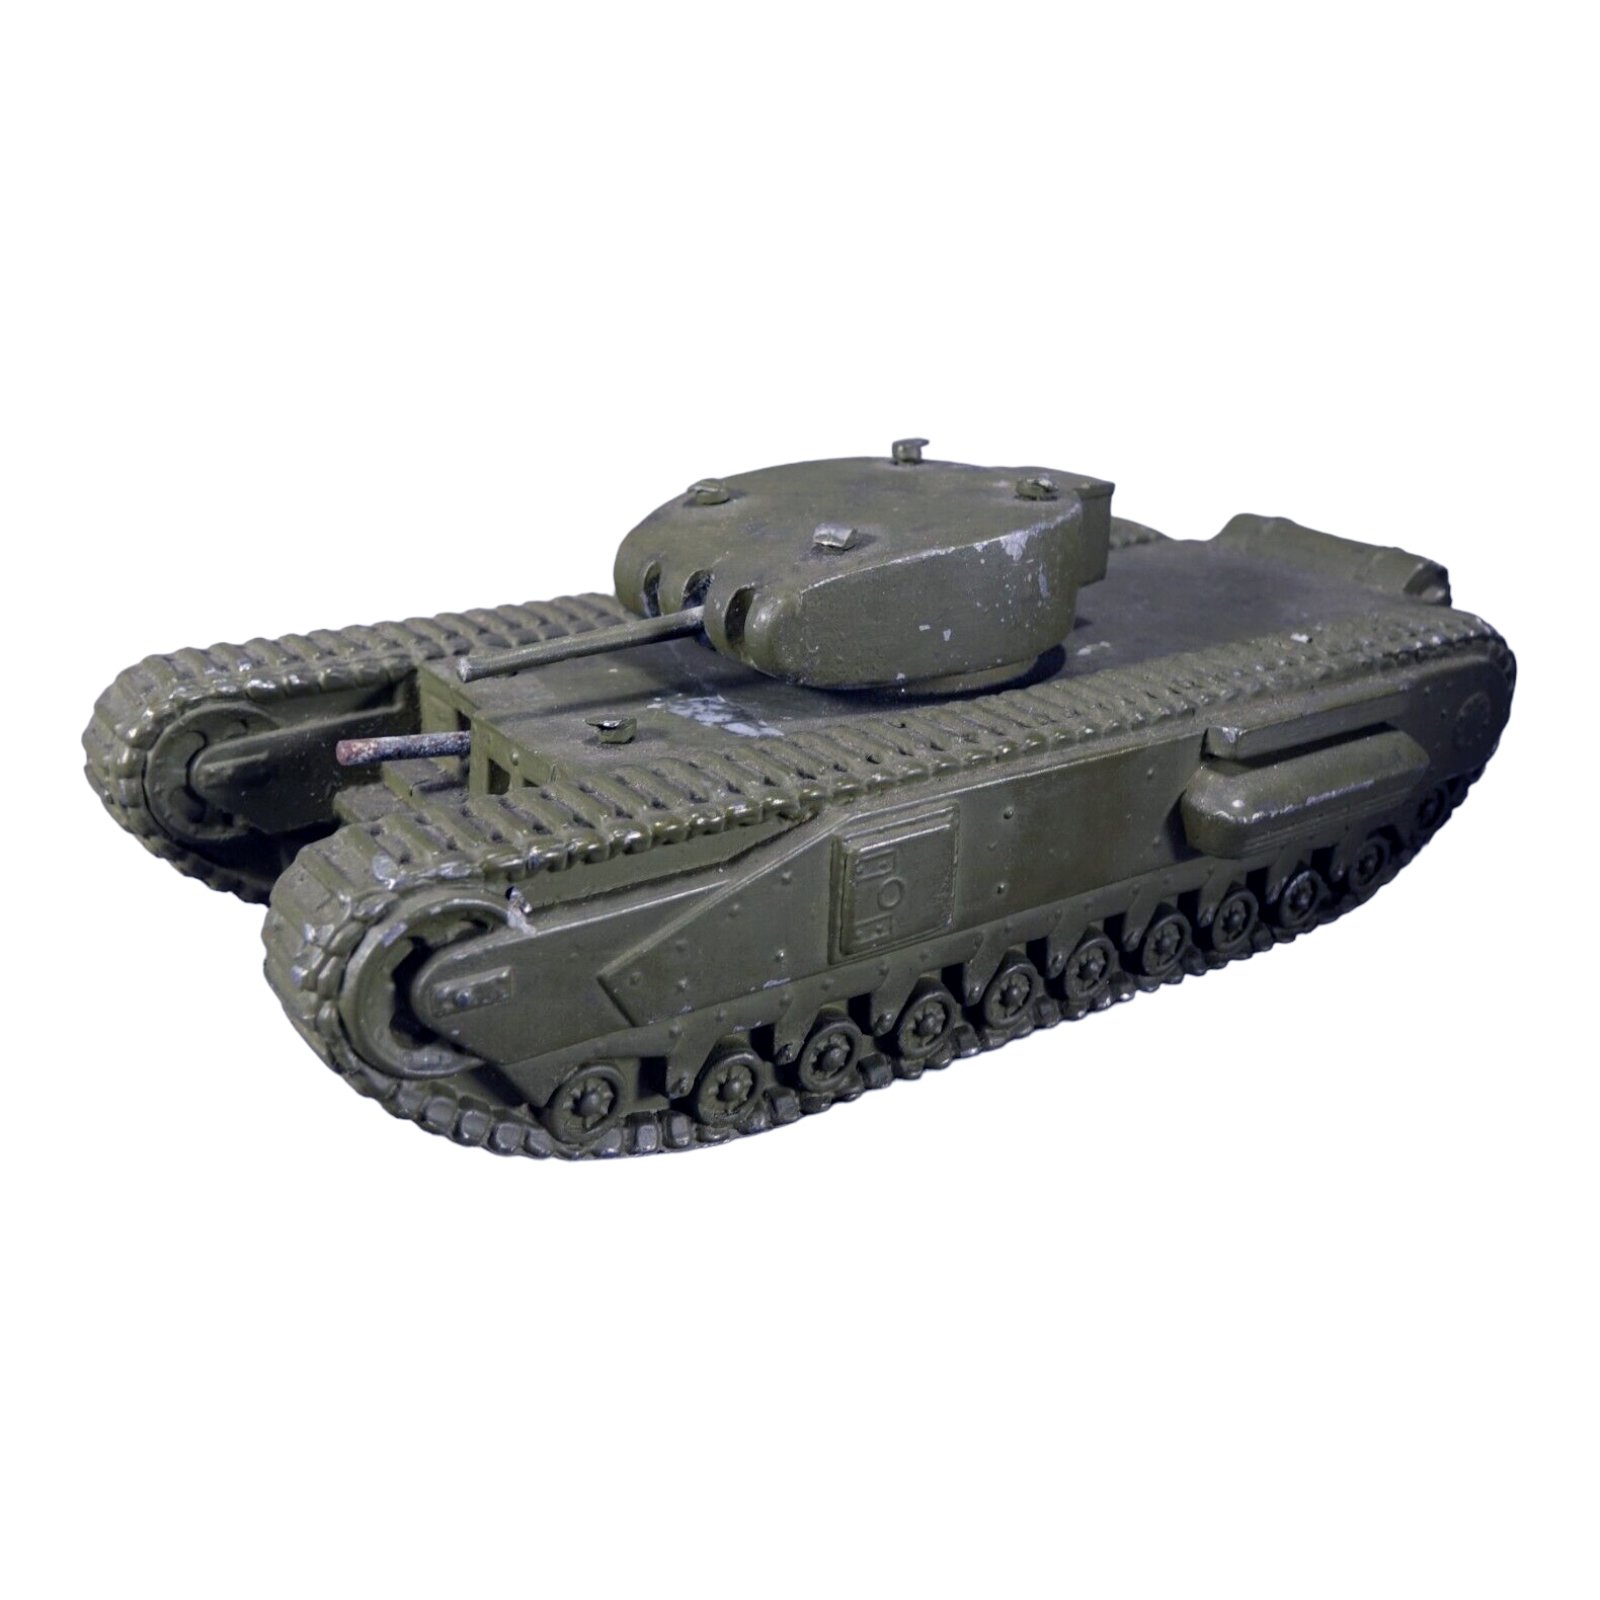 The Comet 8 British Churchill Tank: A Jewel of Military